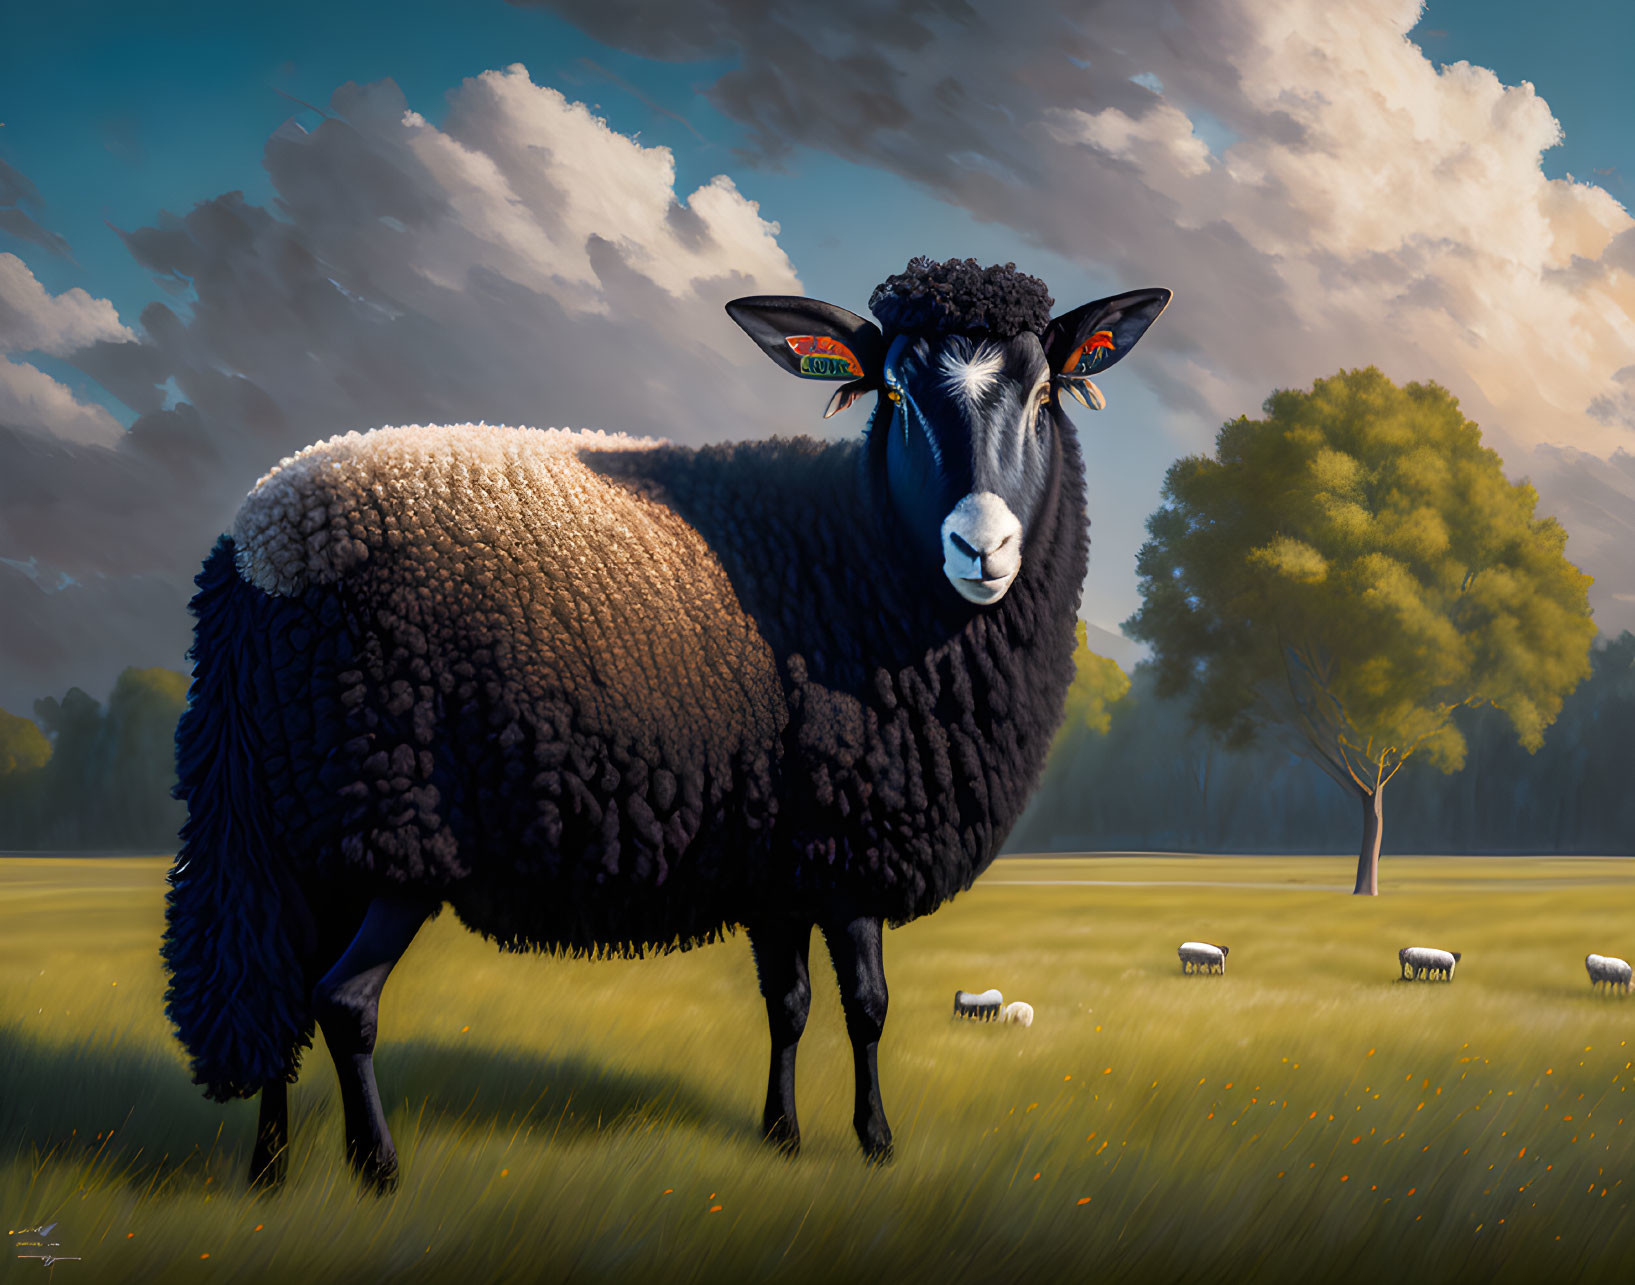 Illustration of black sheep with voluminous fleece in sunlit field